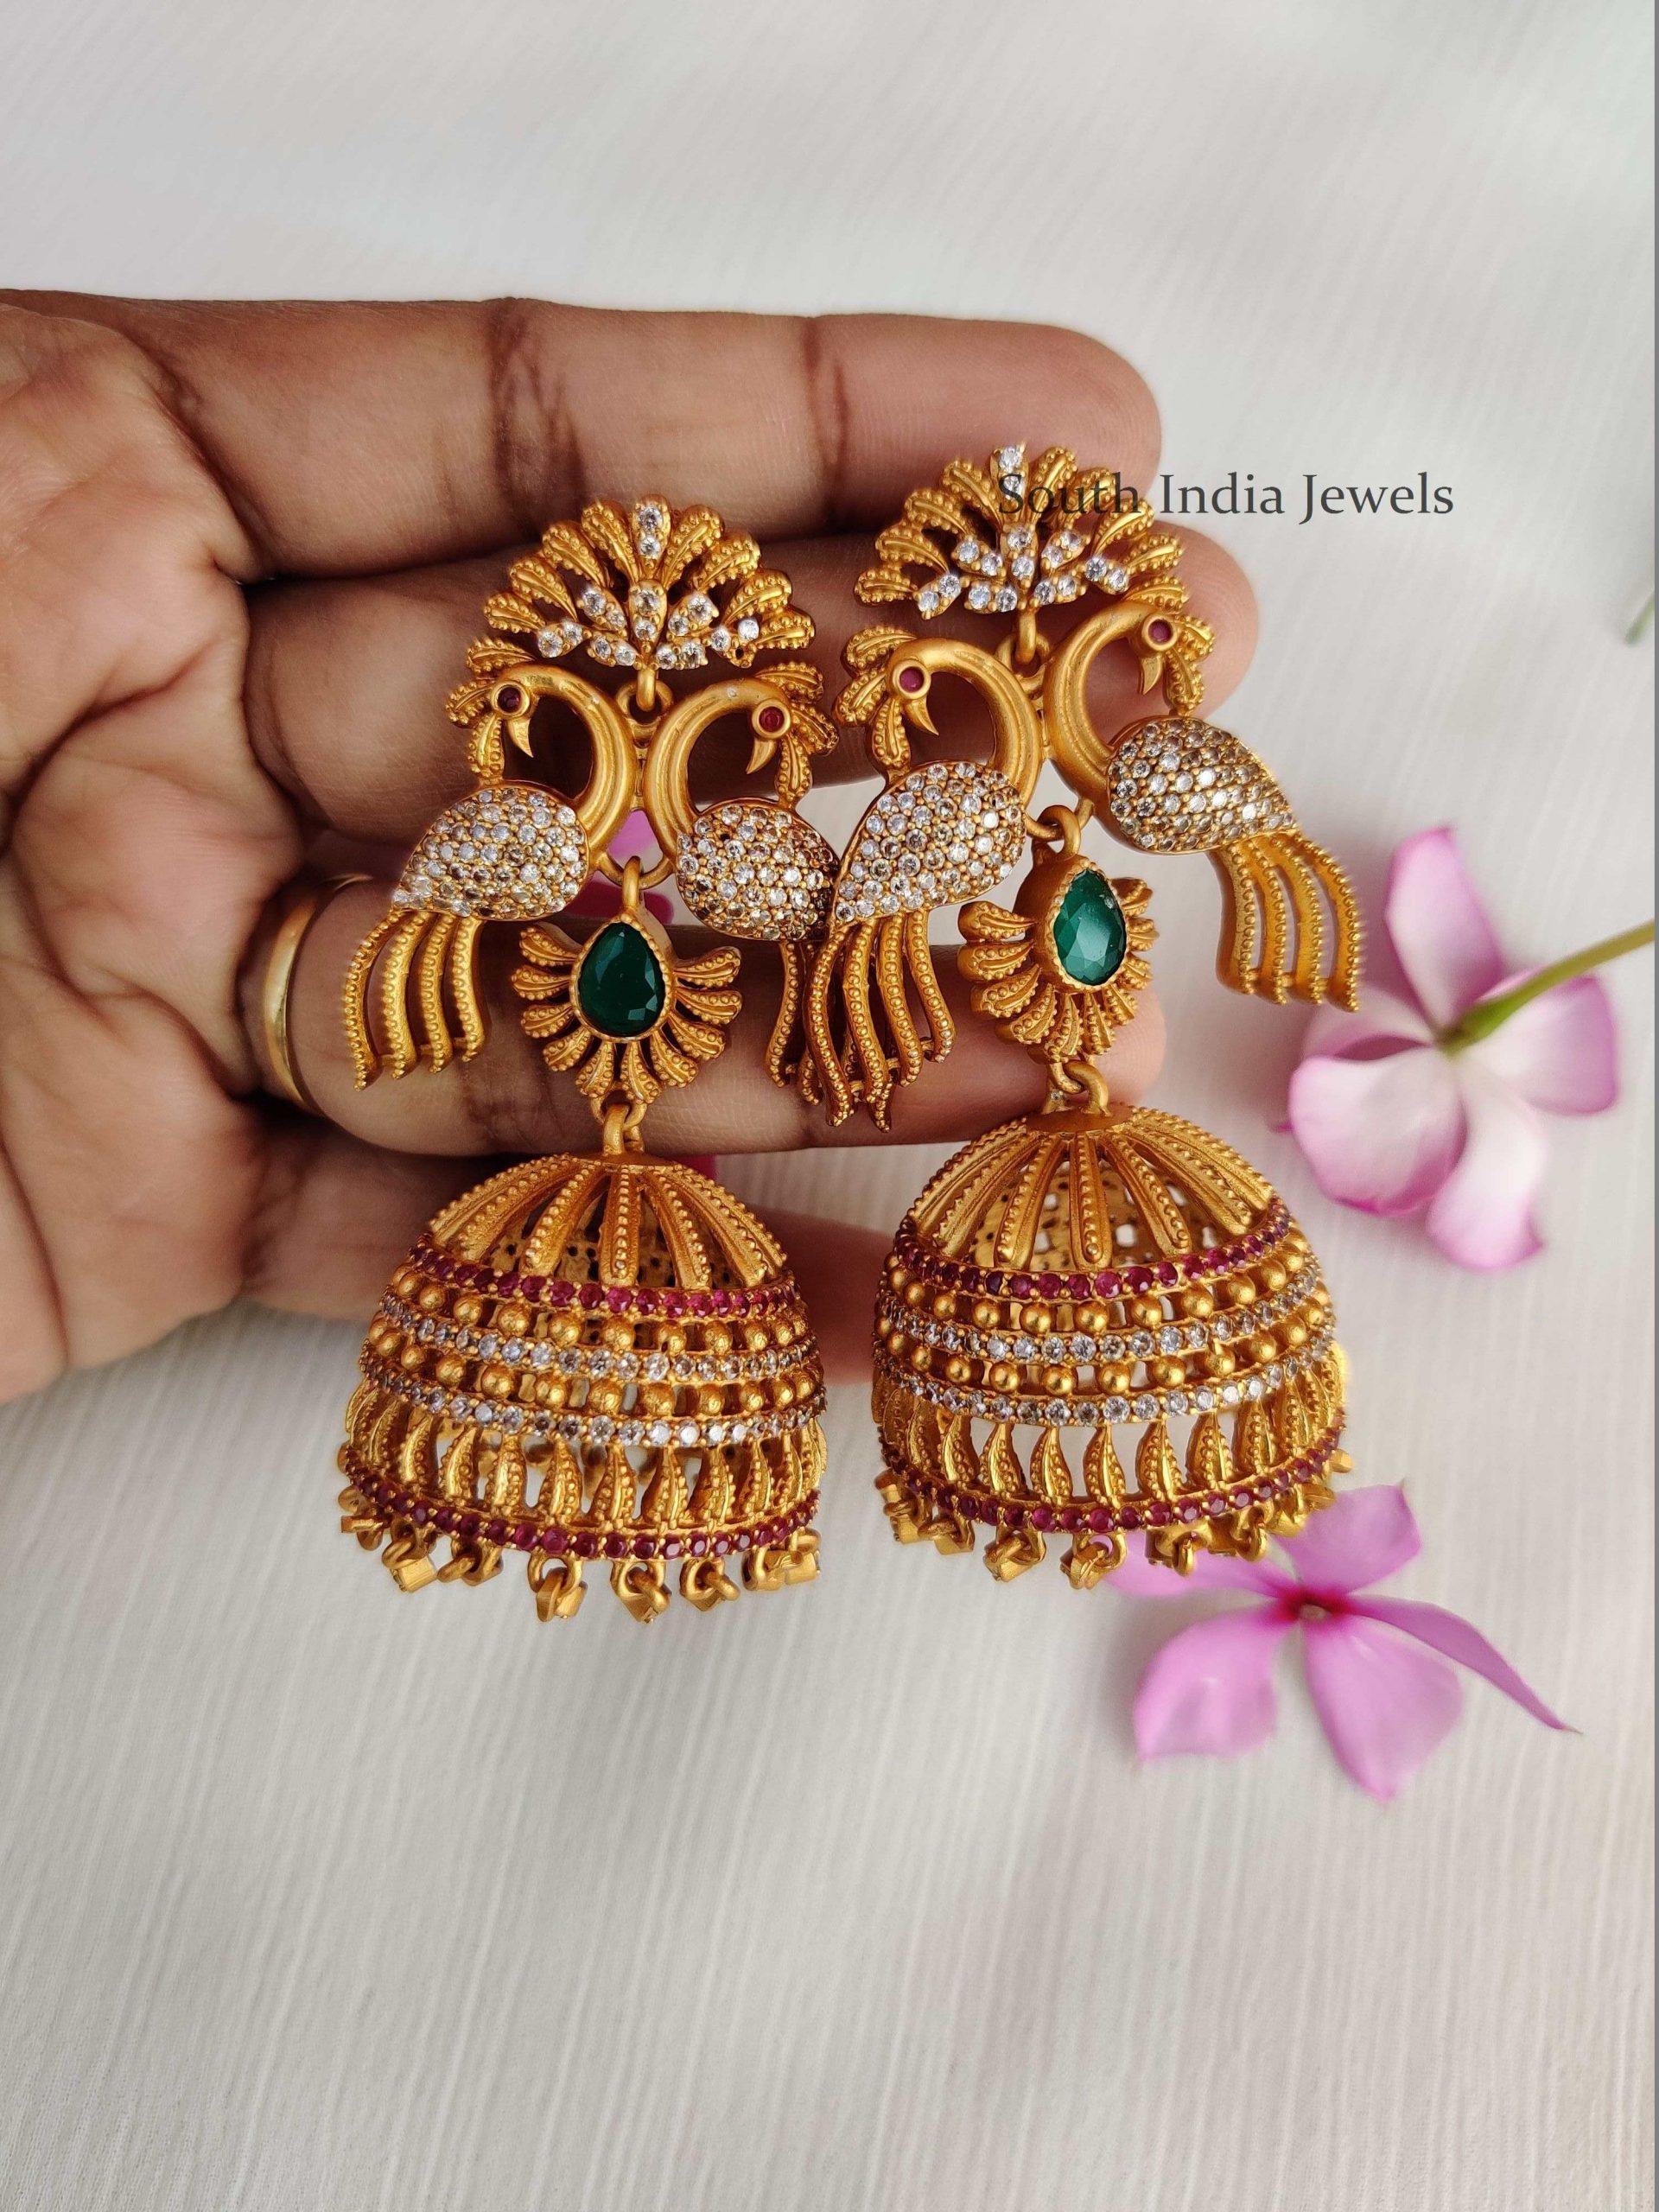 Grand Peacock Design Jhumkas - South India Jewels